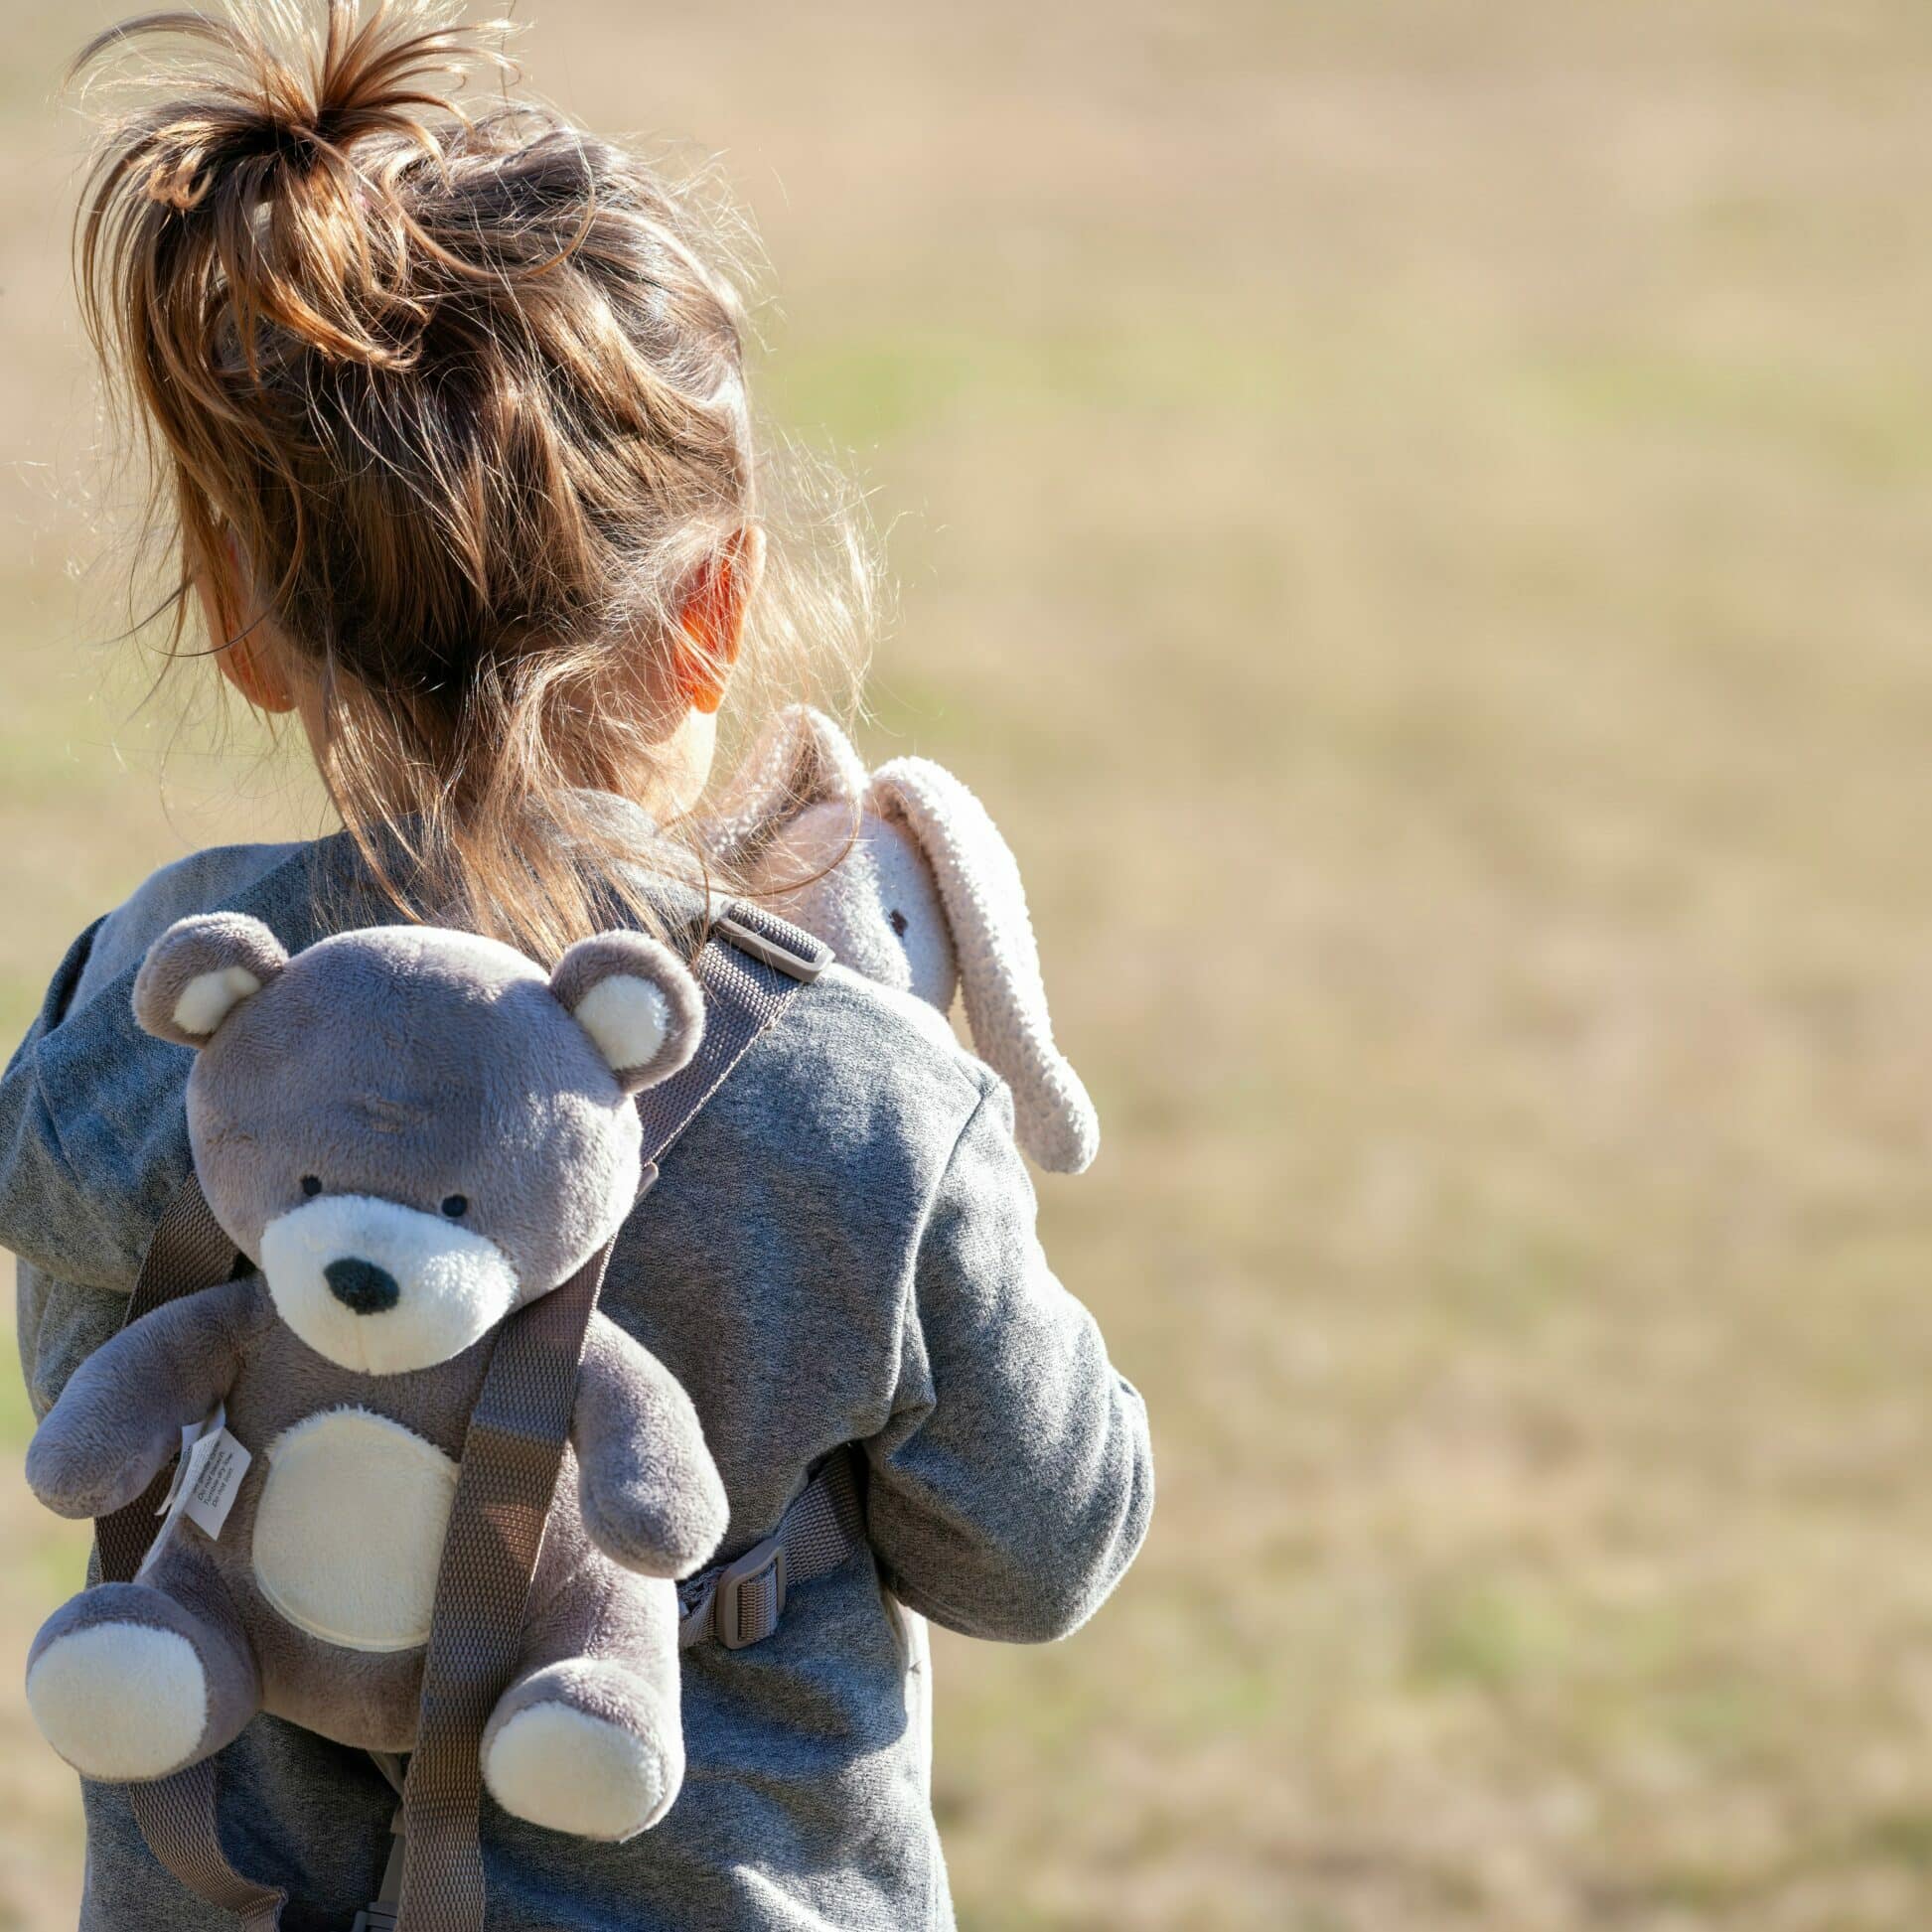 a little girl holding a teddy bear in a field